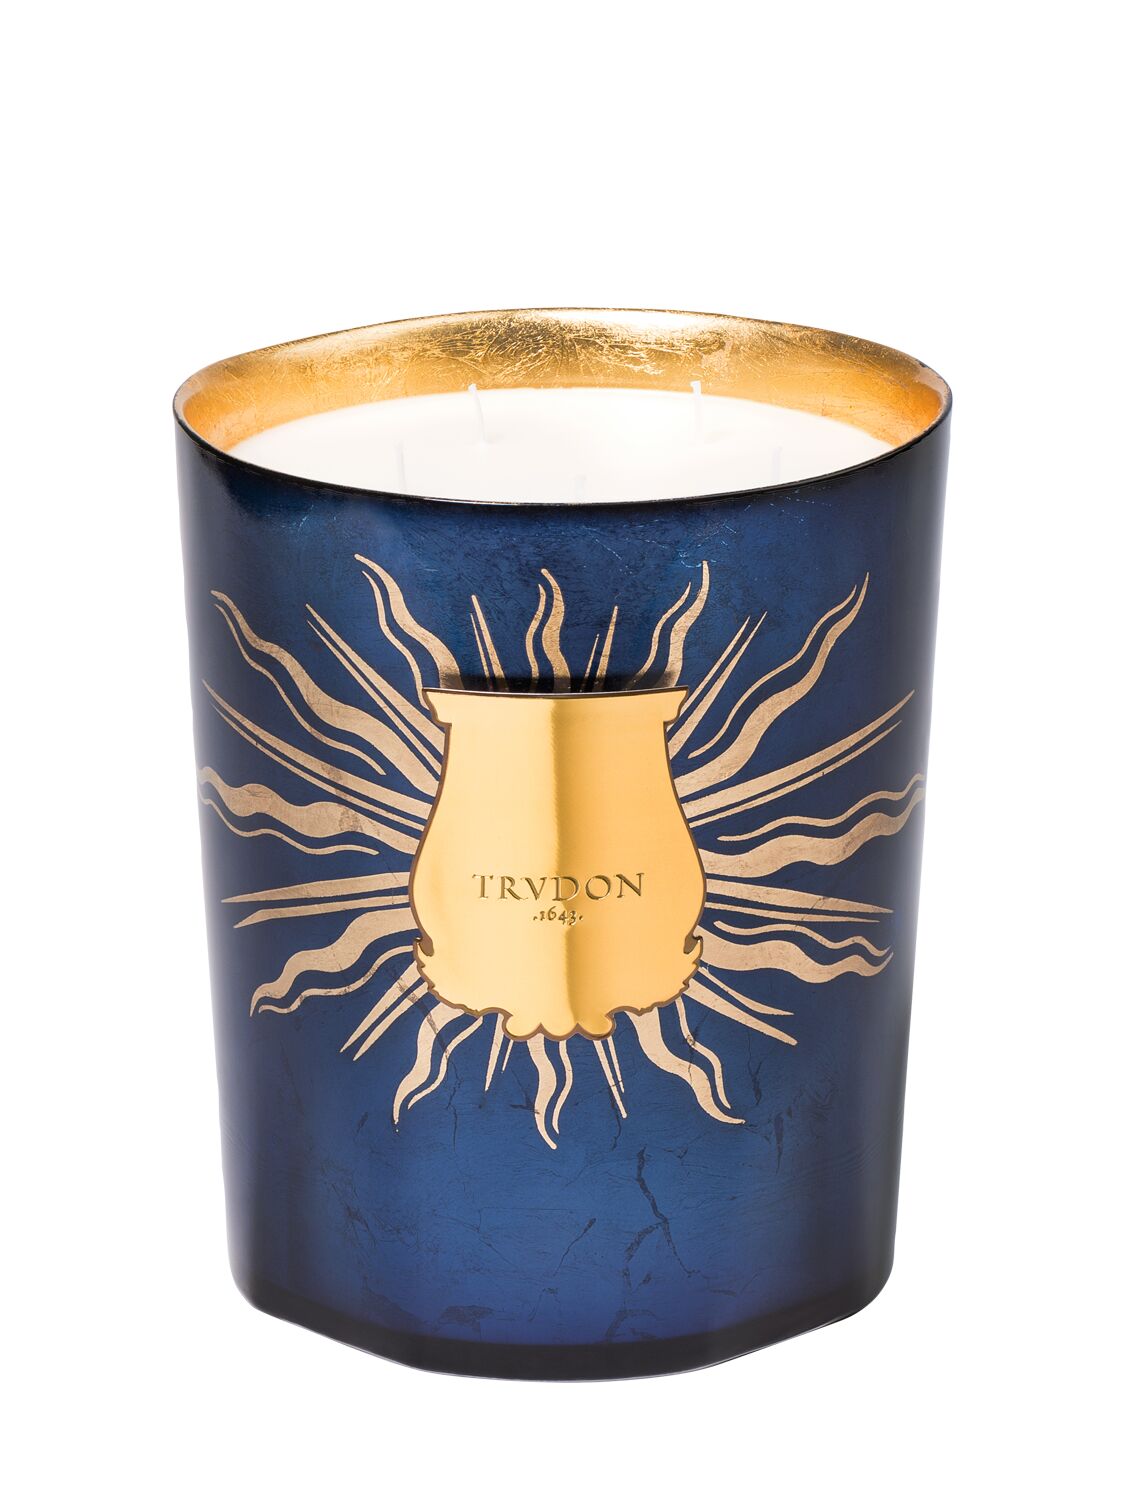 Trudon 2.8千克fir Candle香氛蜡烛 In Blue